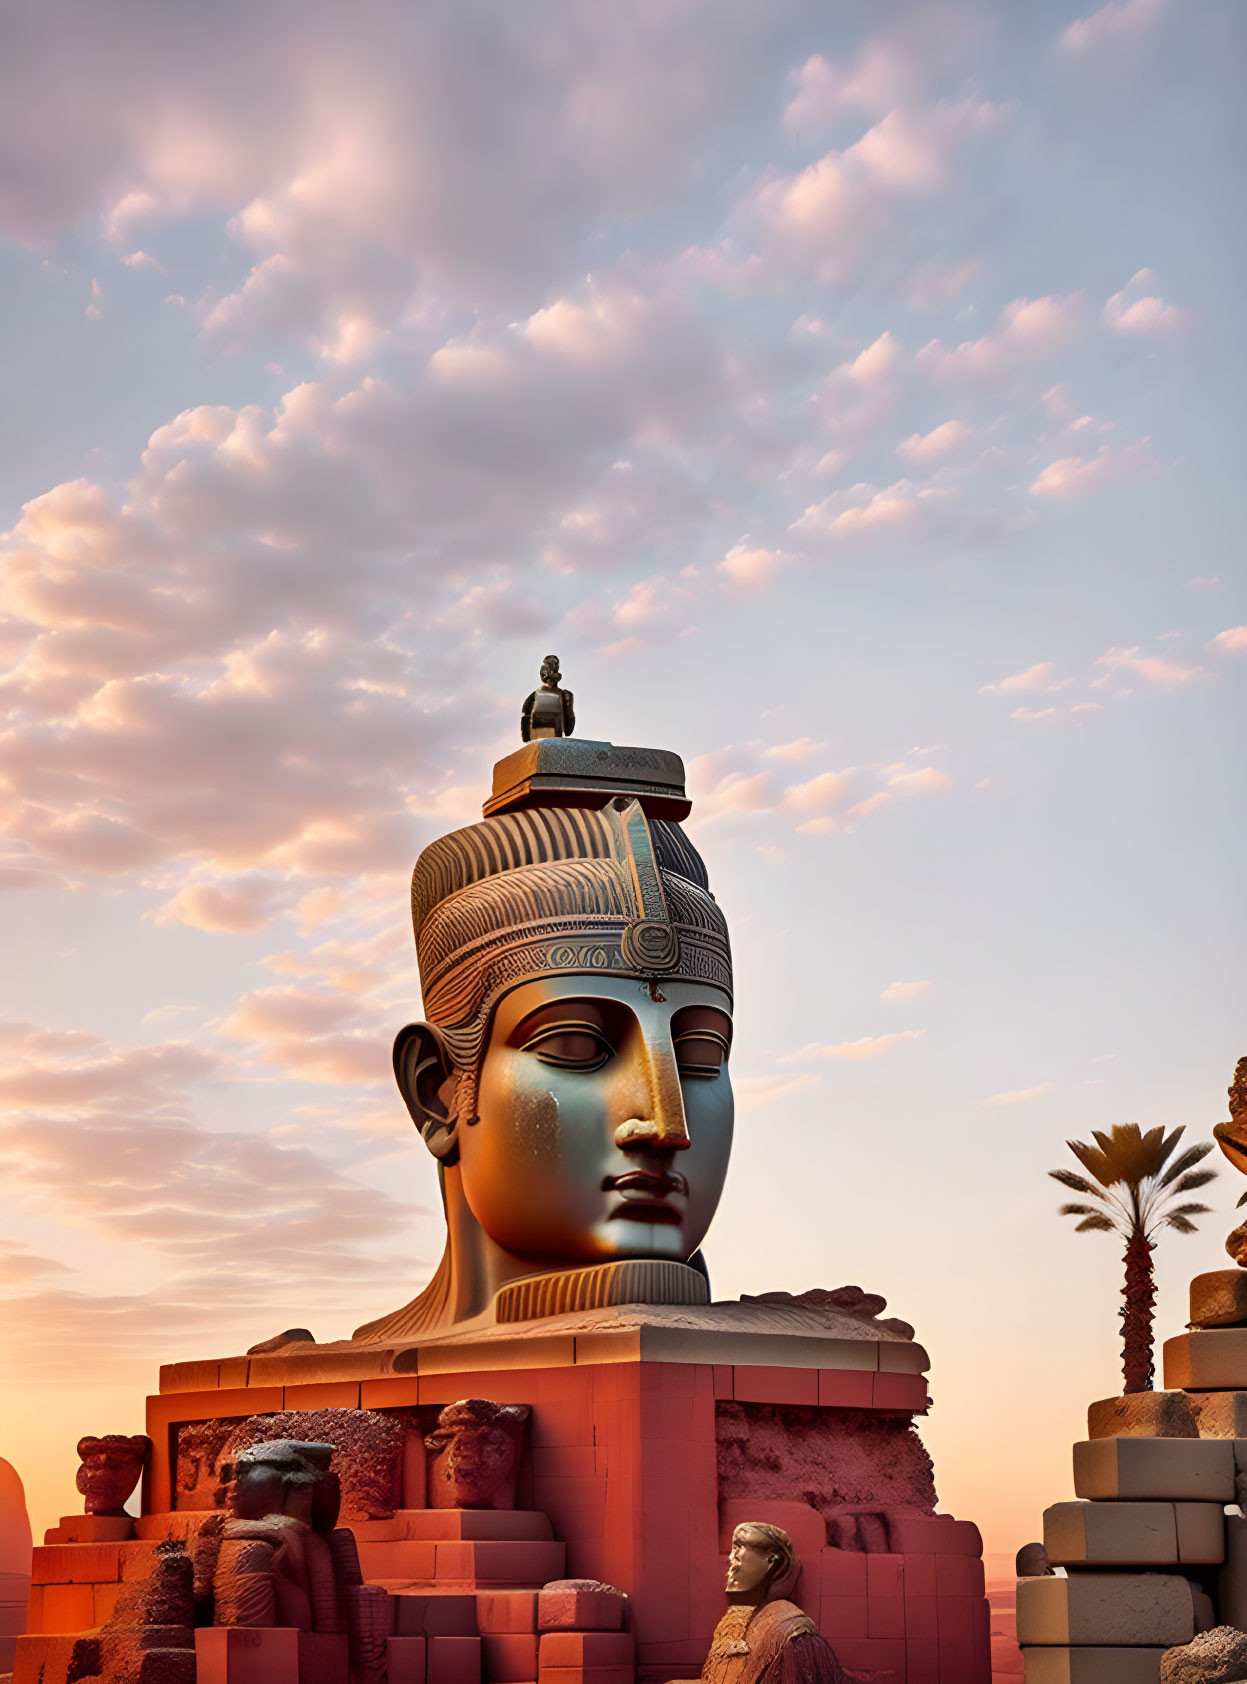 Monumental Egyptian Pharaoh Statue at Sunset